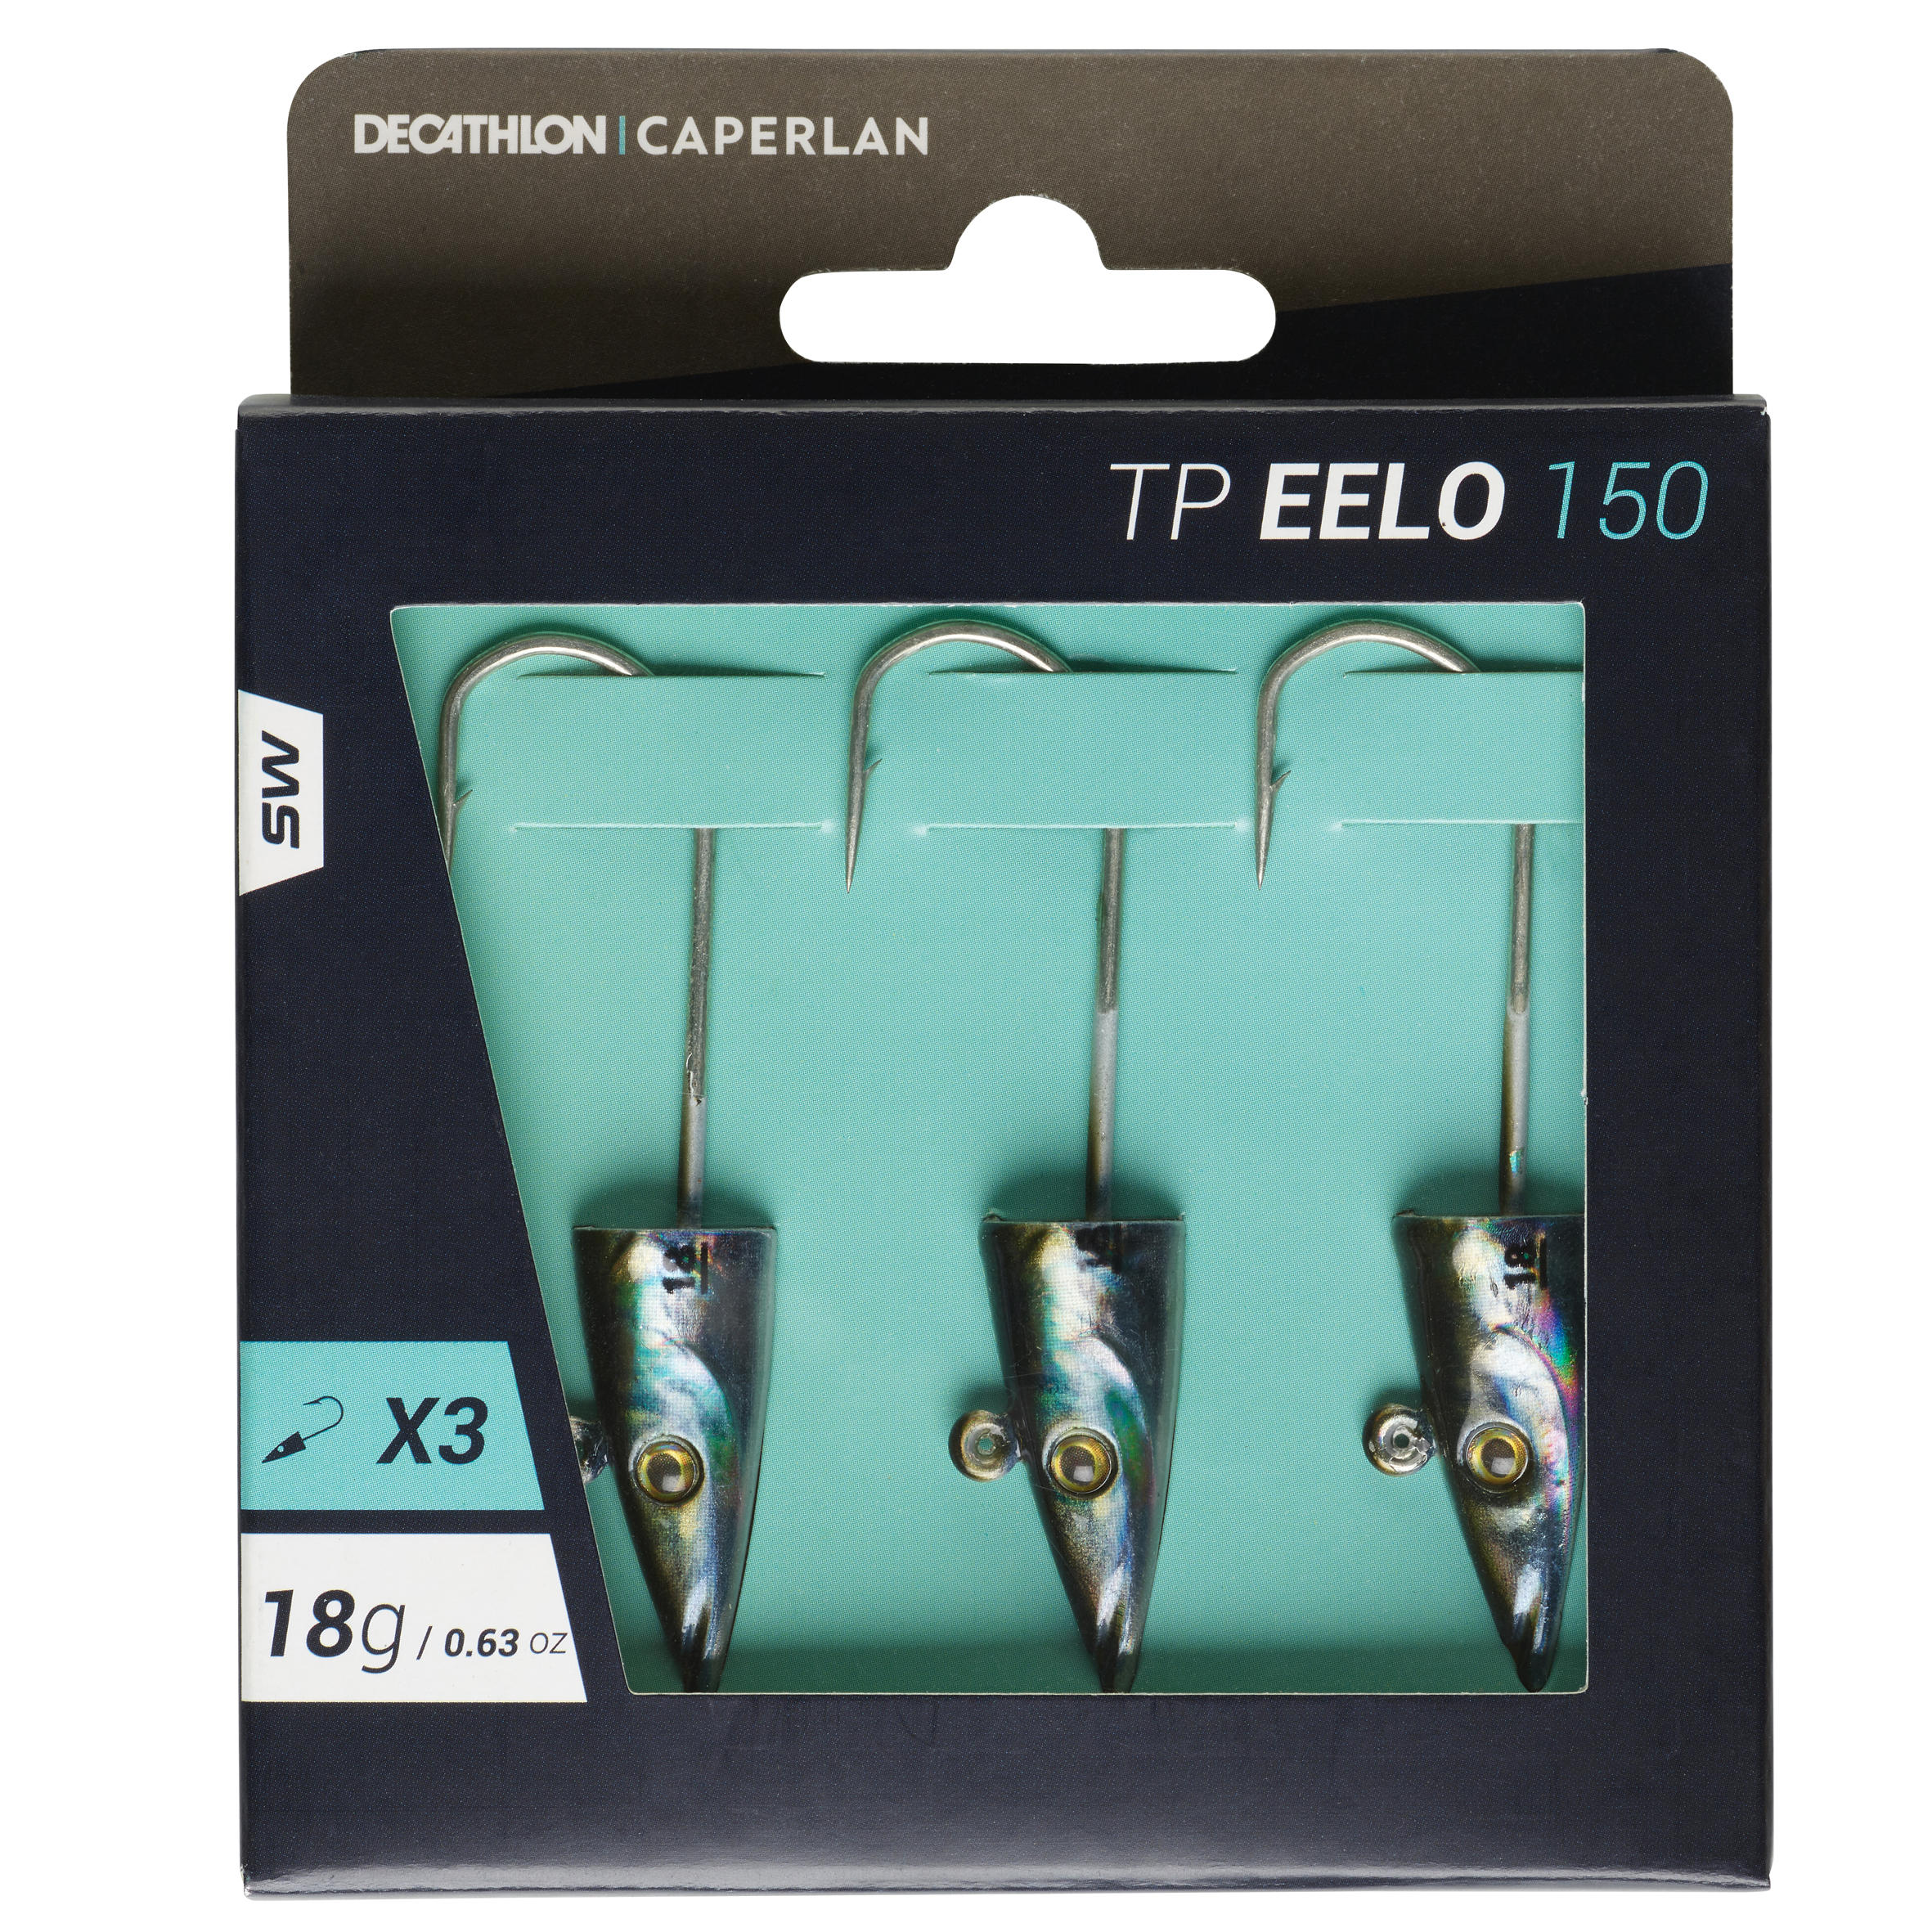 Eelo 150 darting jighead - CAPERLAN